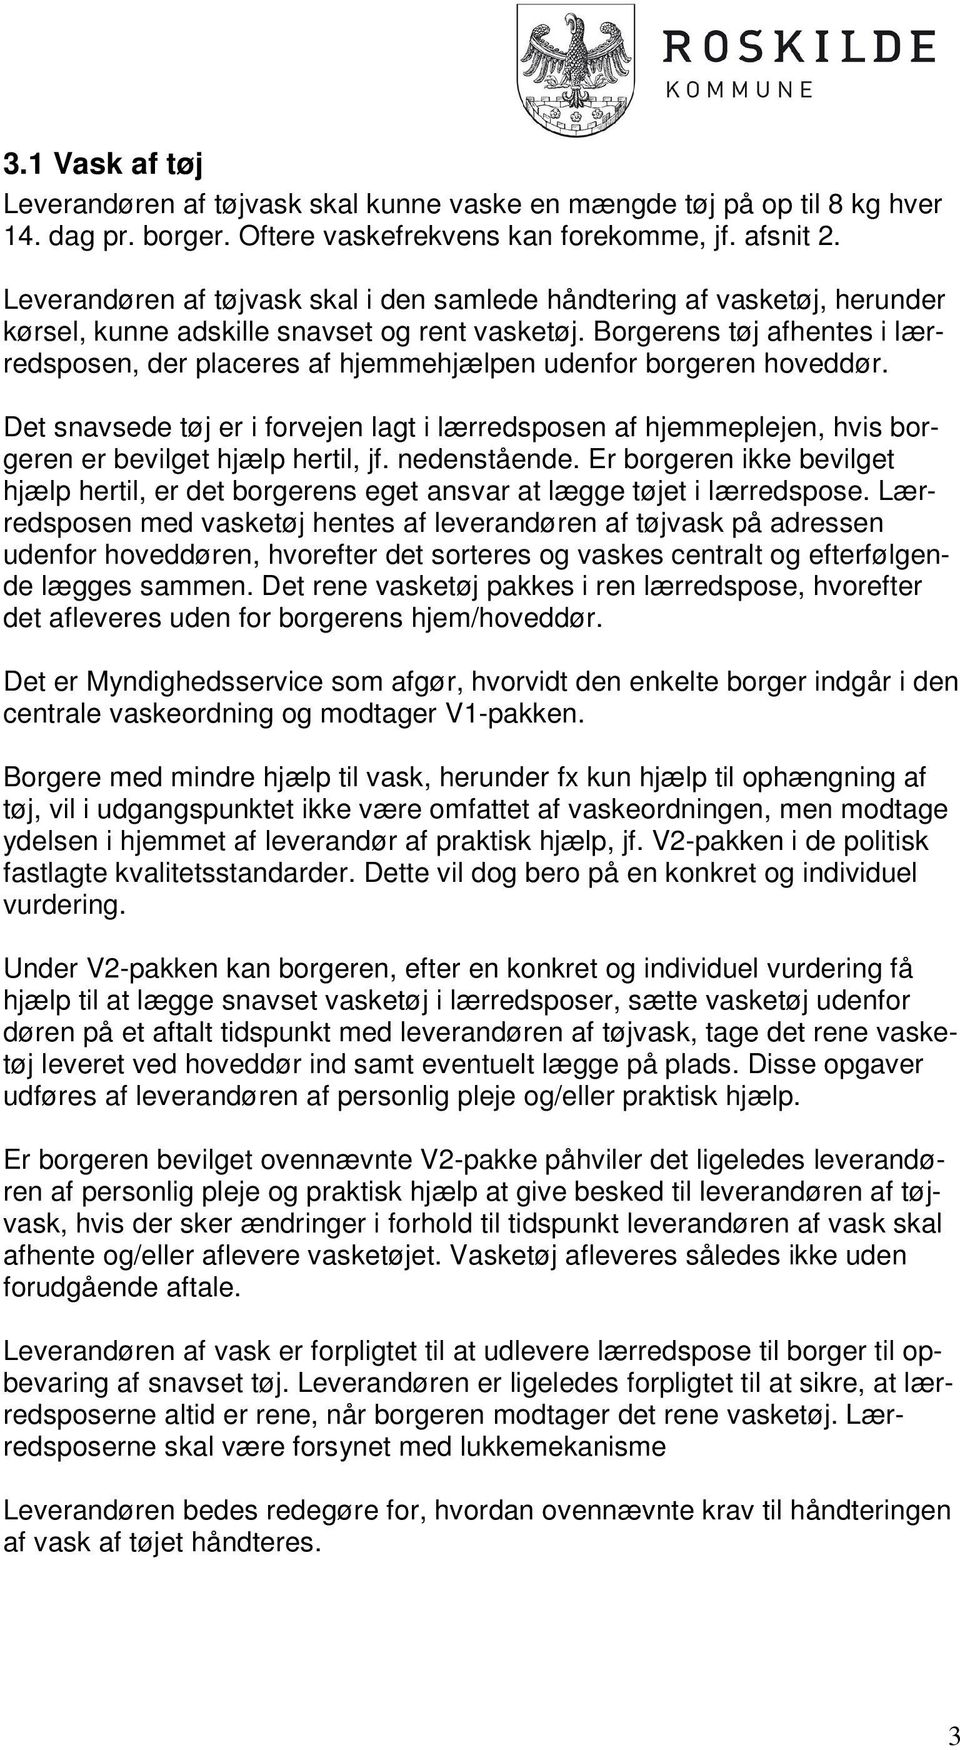 Leverandørkrav for central vaskeordning i Roskilde Kommune - PDF ...